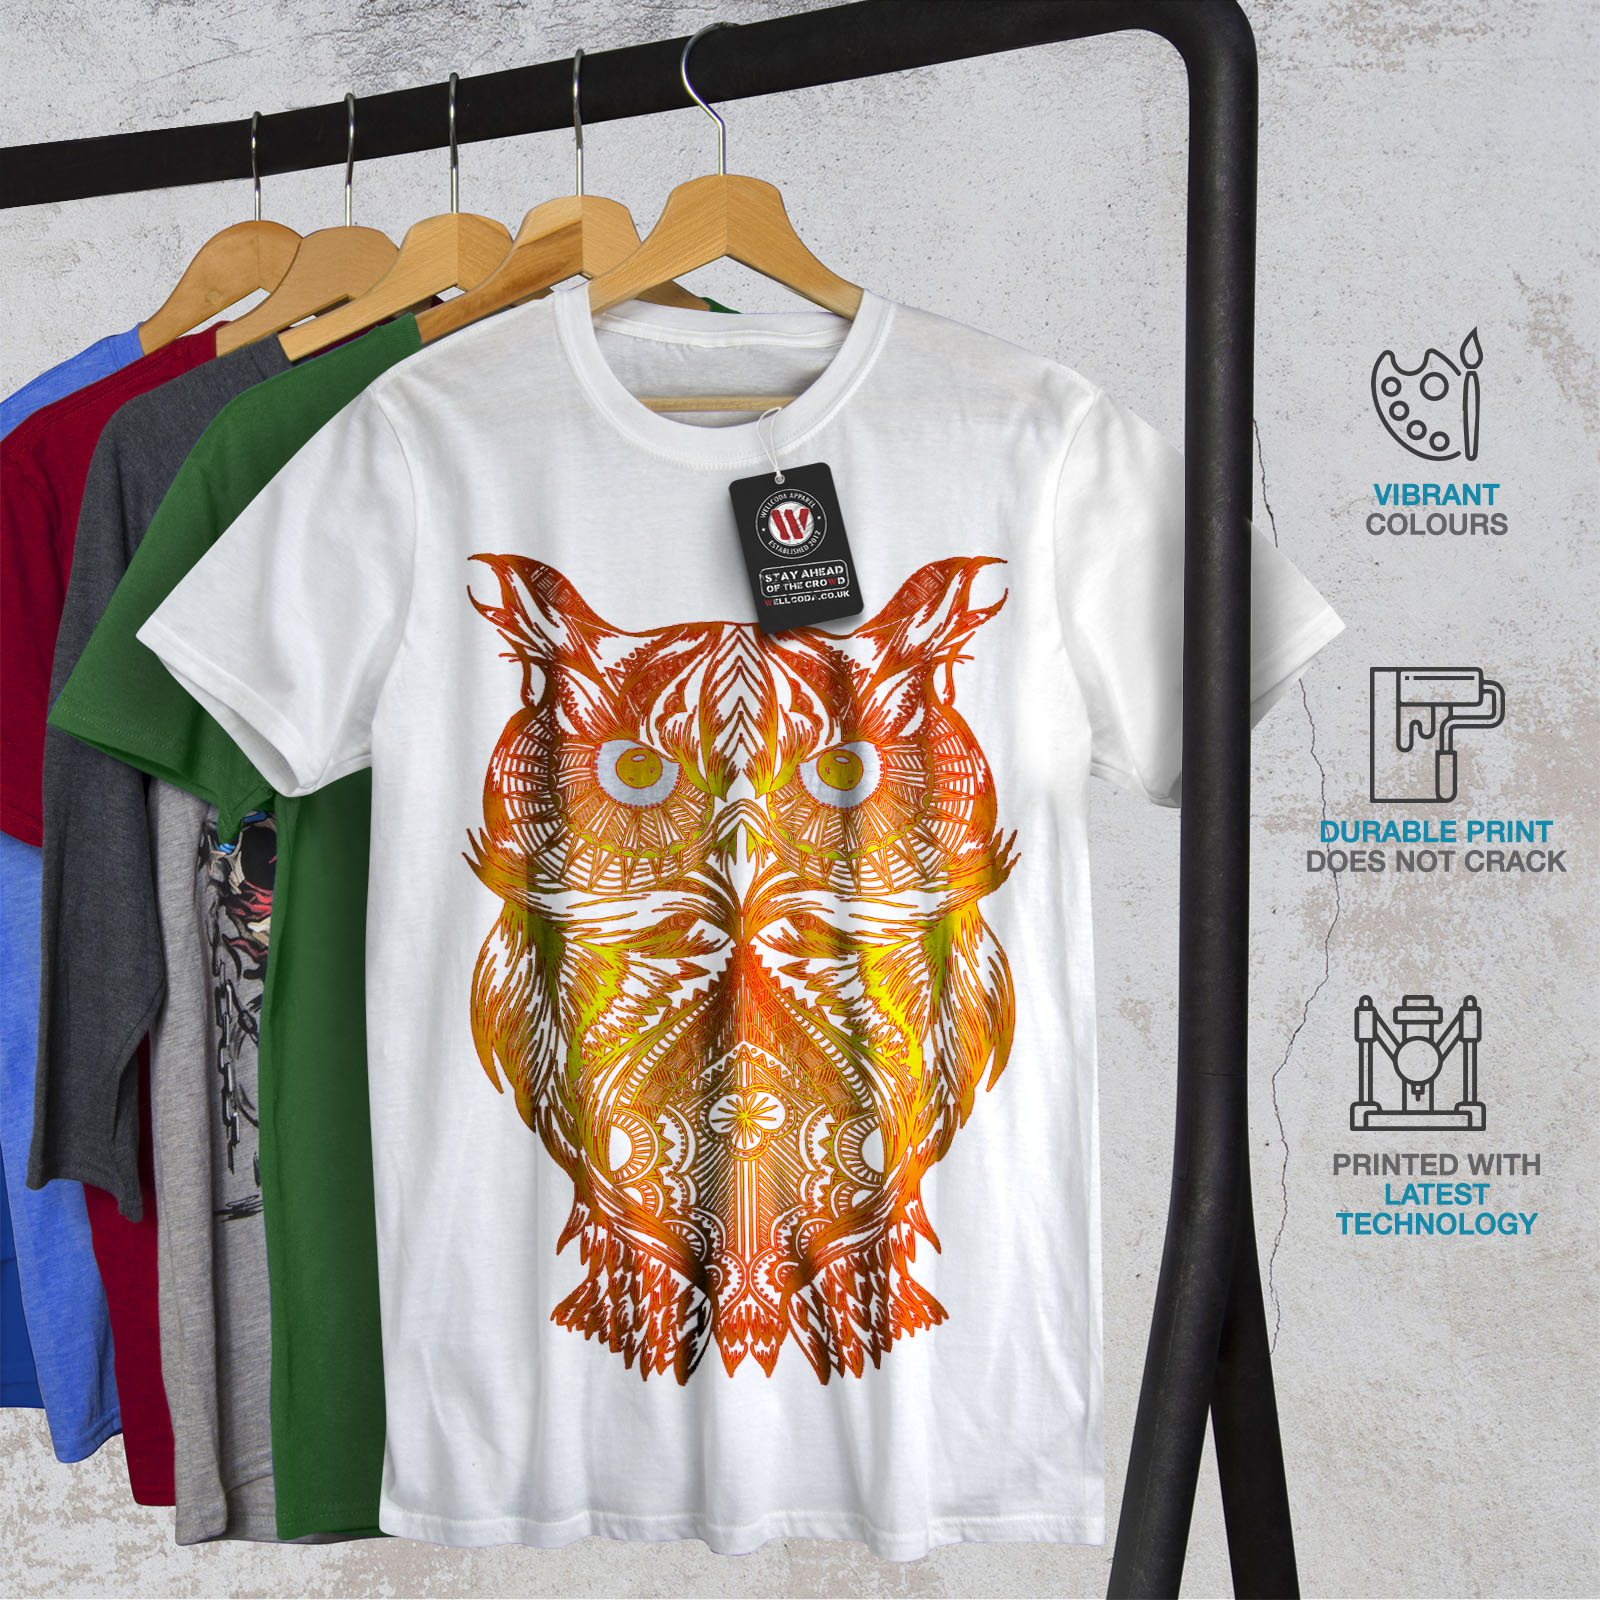 thumbnail 12  - Wellcoda Night Owl On Fire Mens T-shirt, Burning Graphic Design Printed Tee